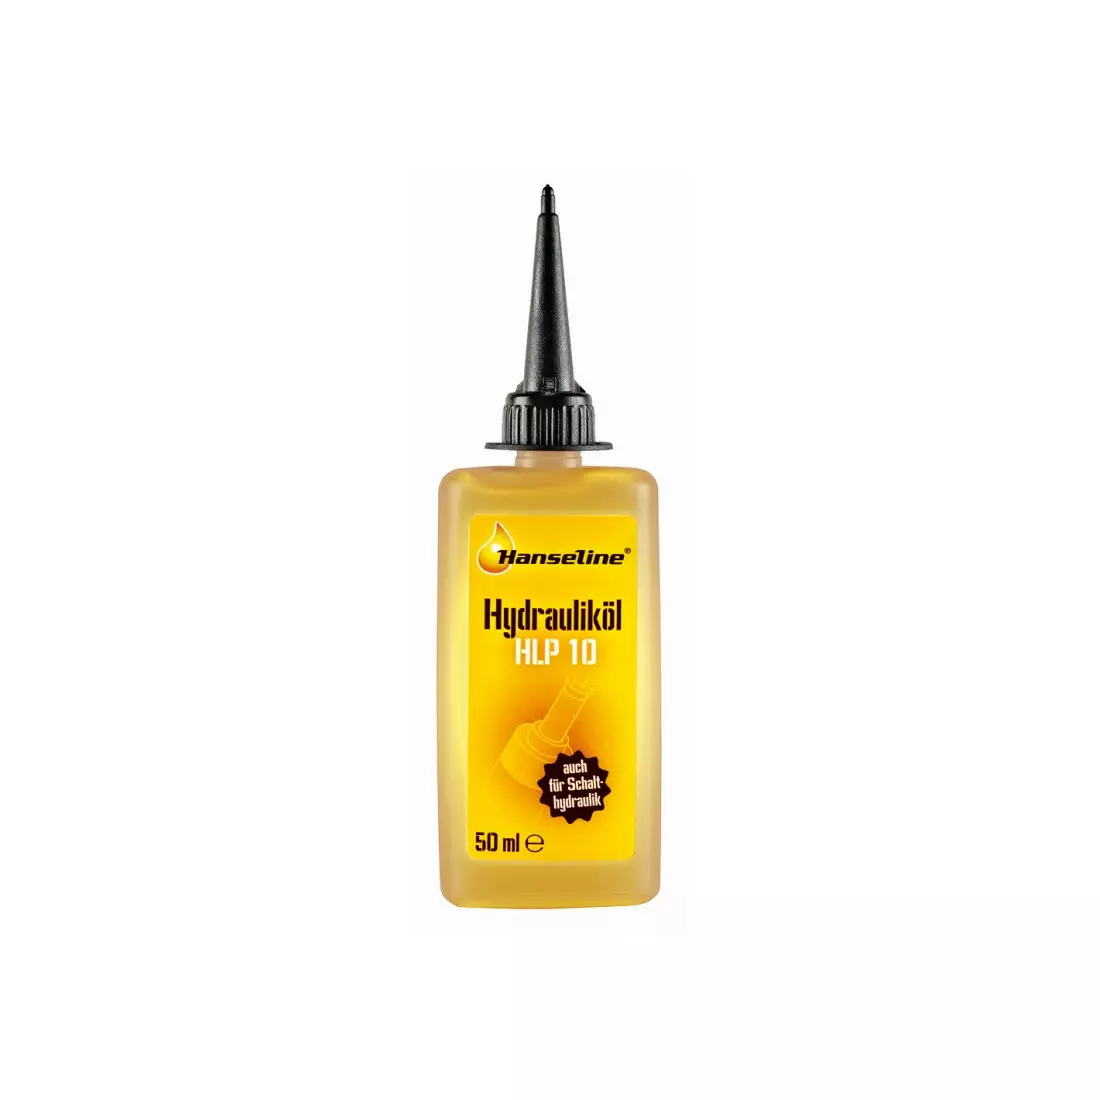 HANSELINE Hydraulic brake oil Fék- és villaolaj HLP 10 Shimano 50 ml HA-305109